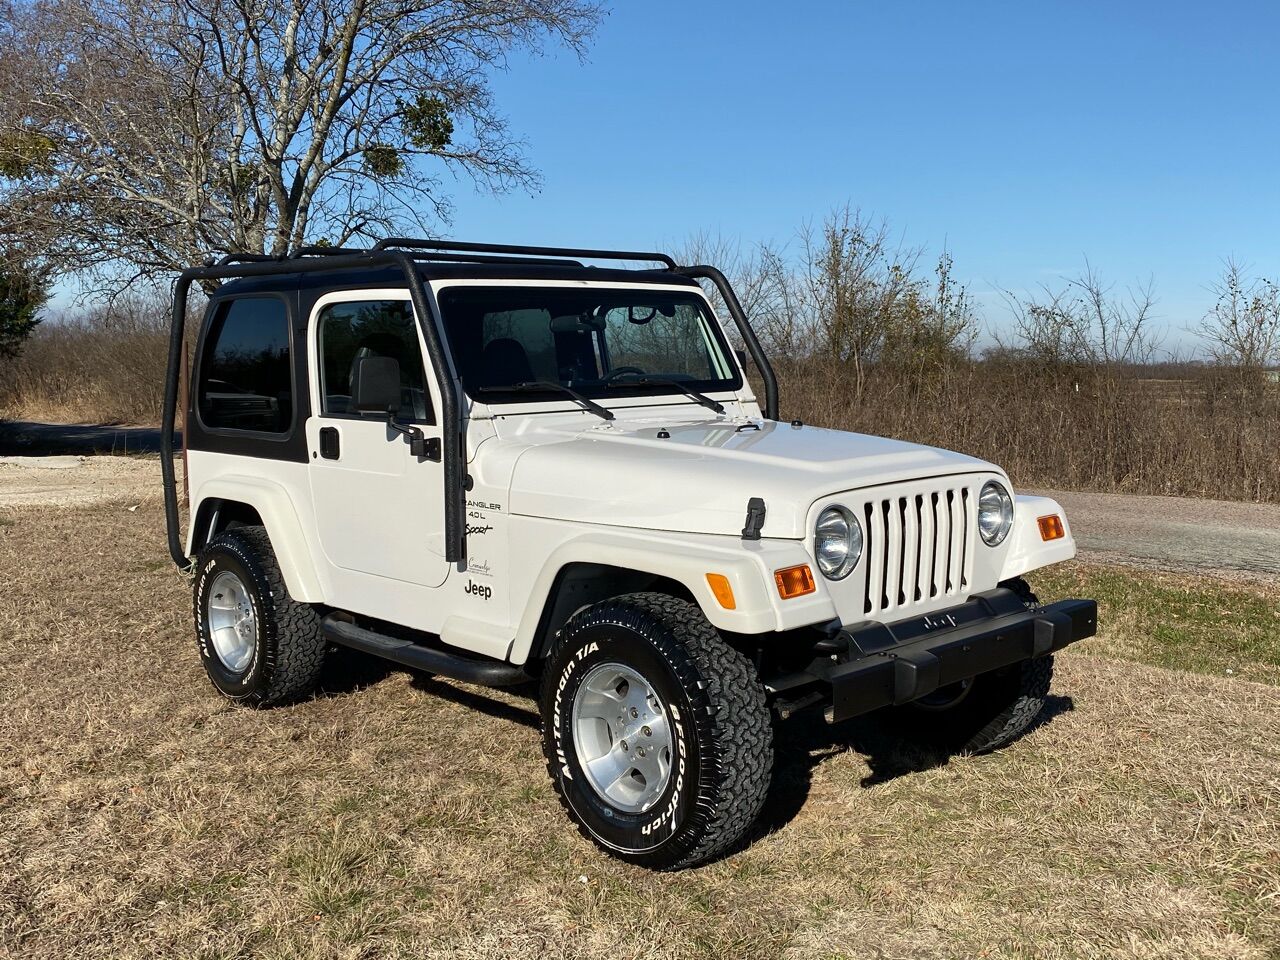 2001 Jeep Wrangler For Sale - Carsforsale.com®